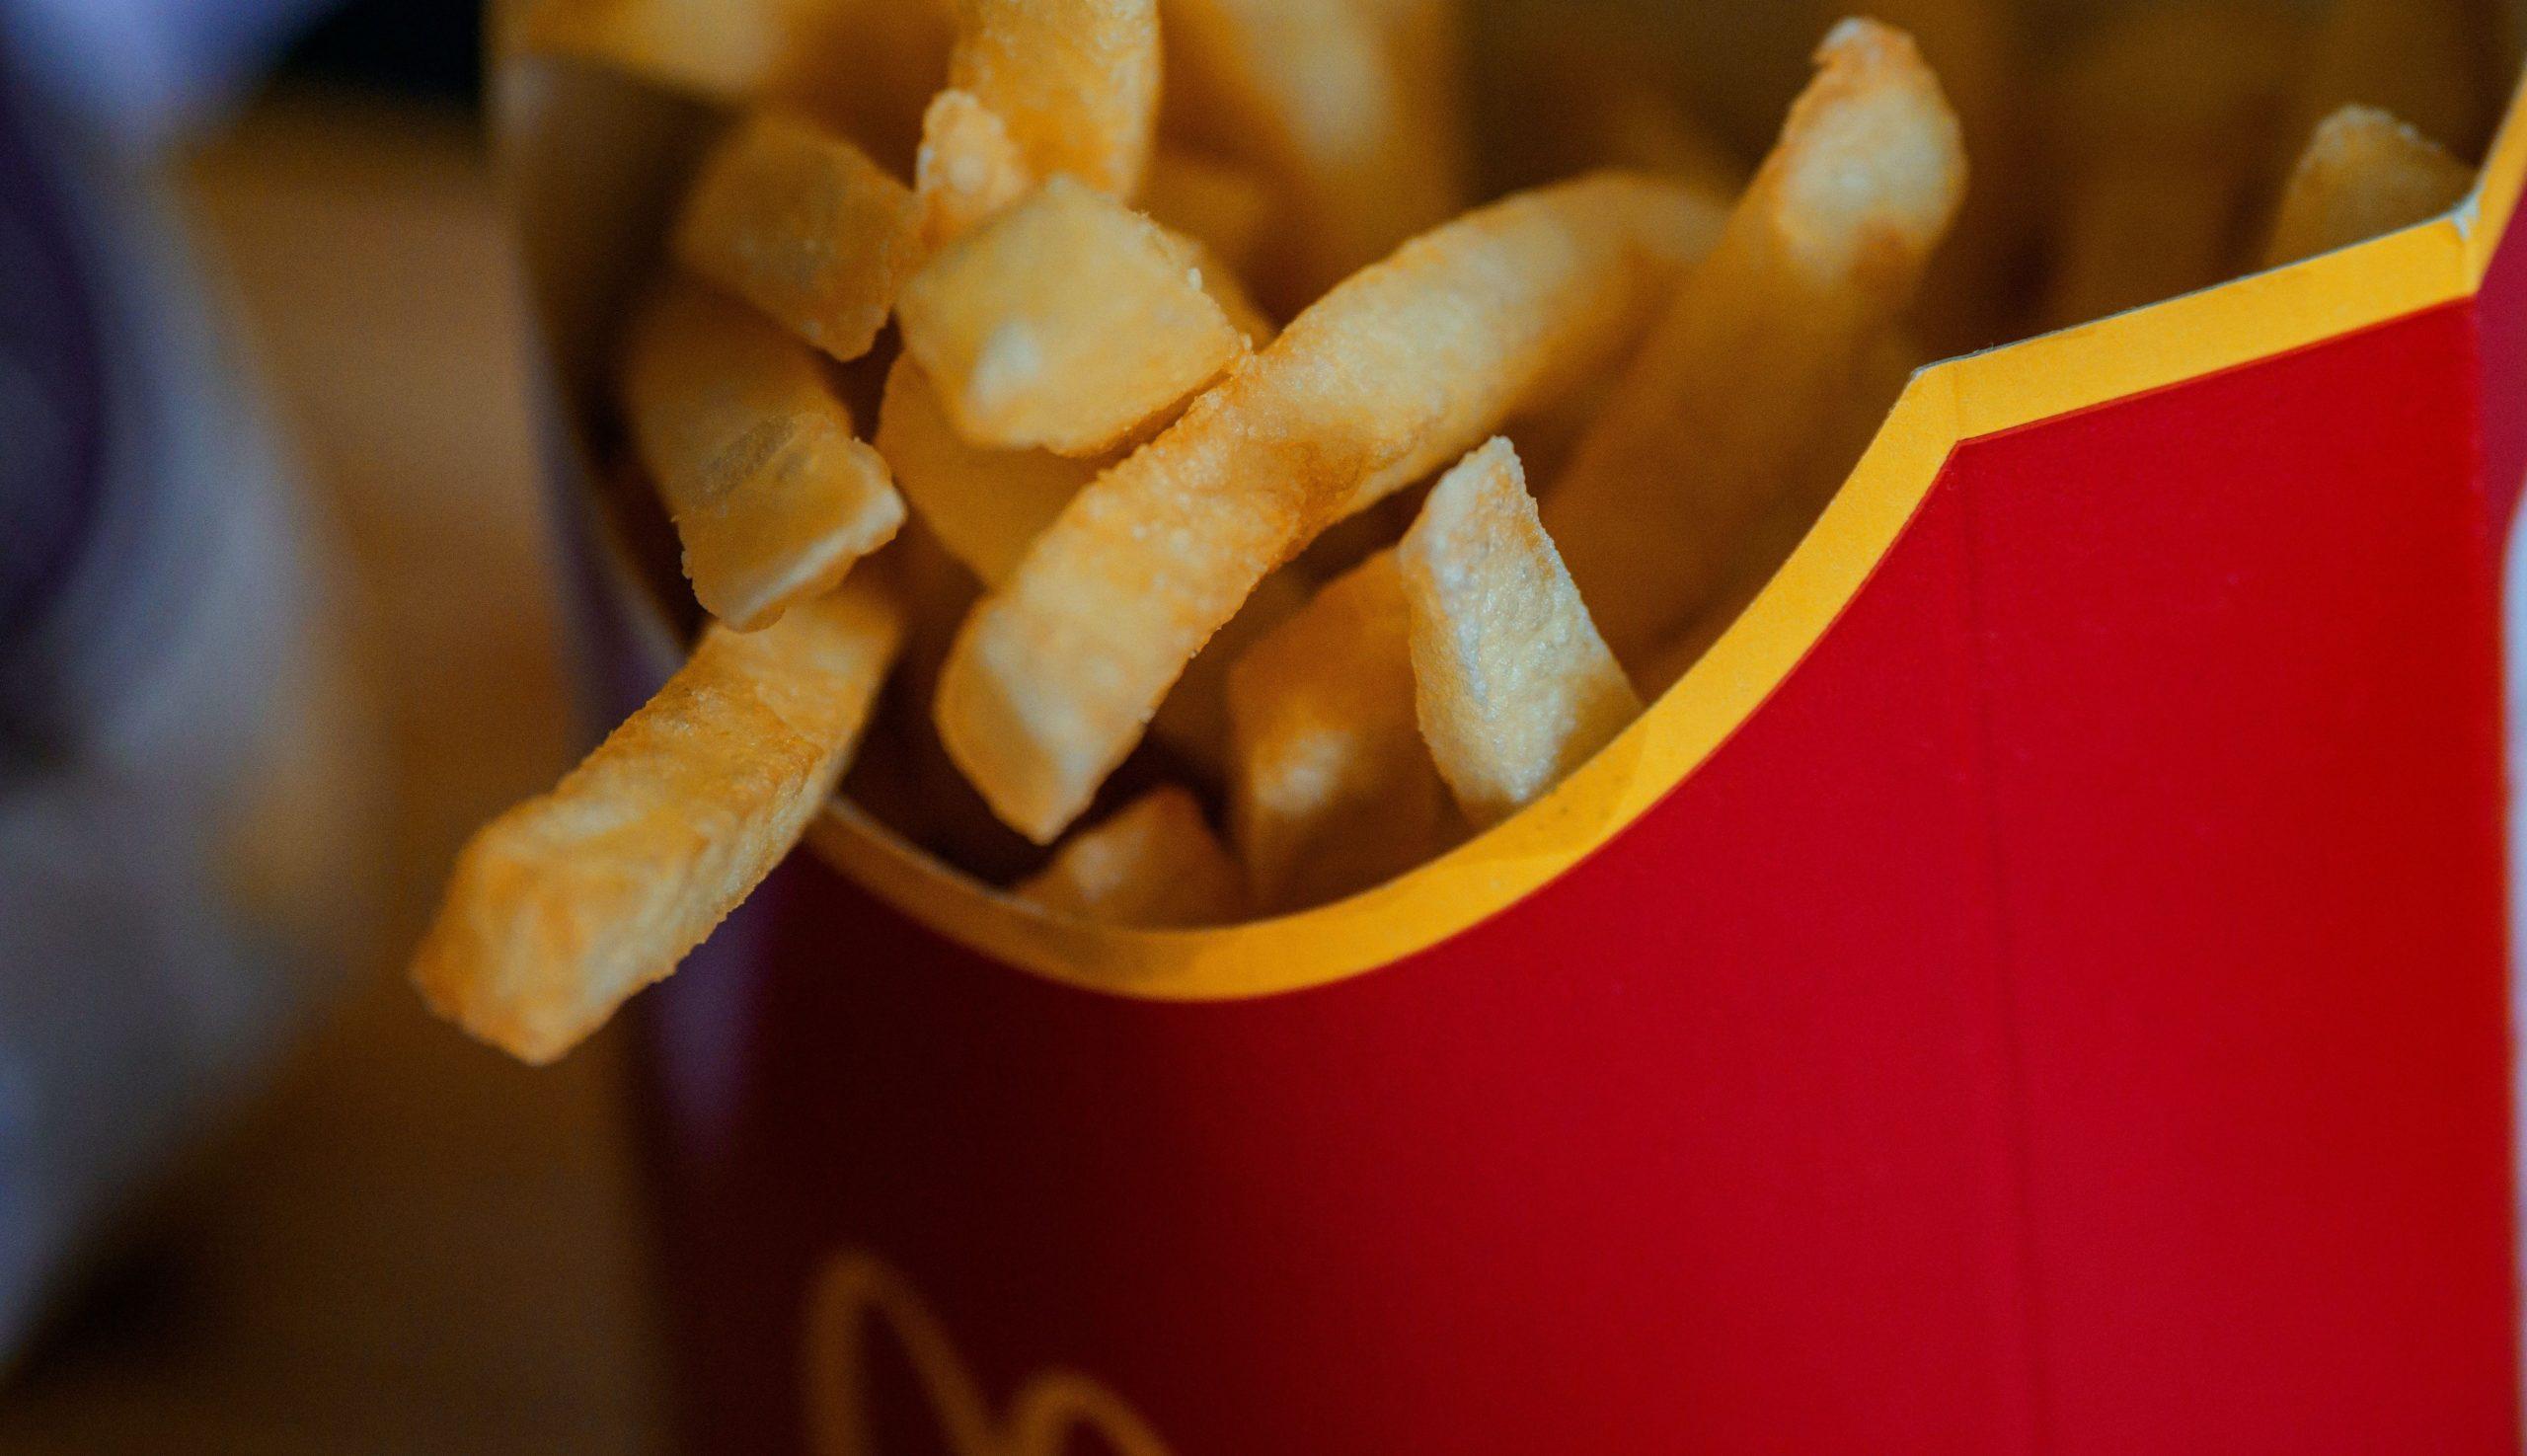 Close up of a basket of McDonald's fries.